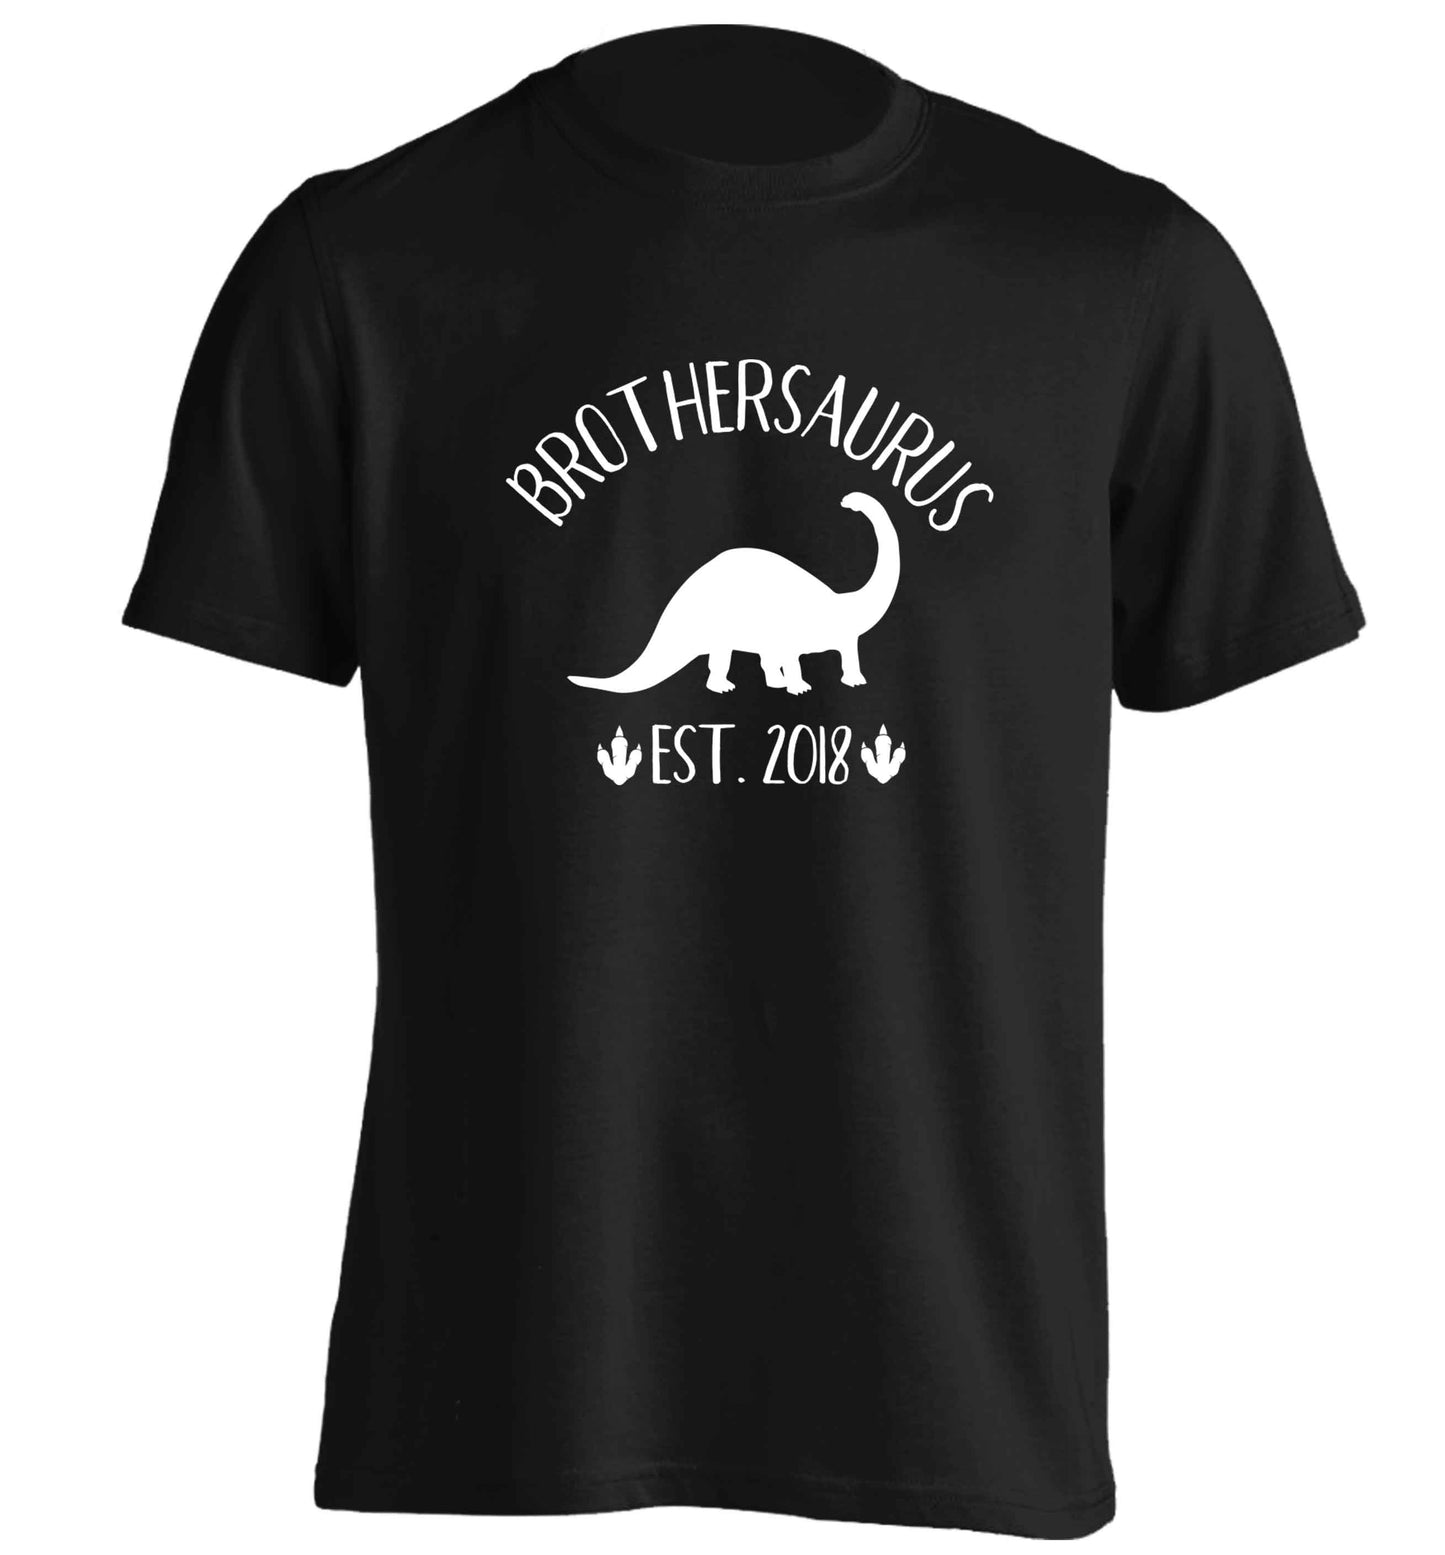 Personalised brothersaurus since (custom date) adults unisex black Tshirt 2XL